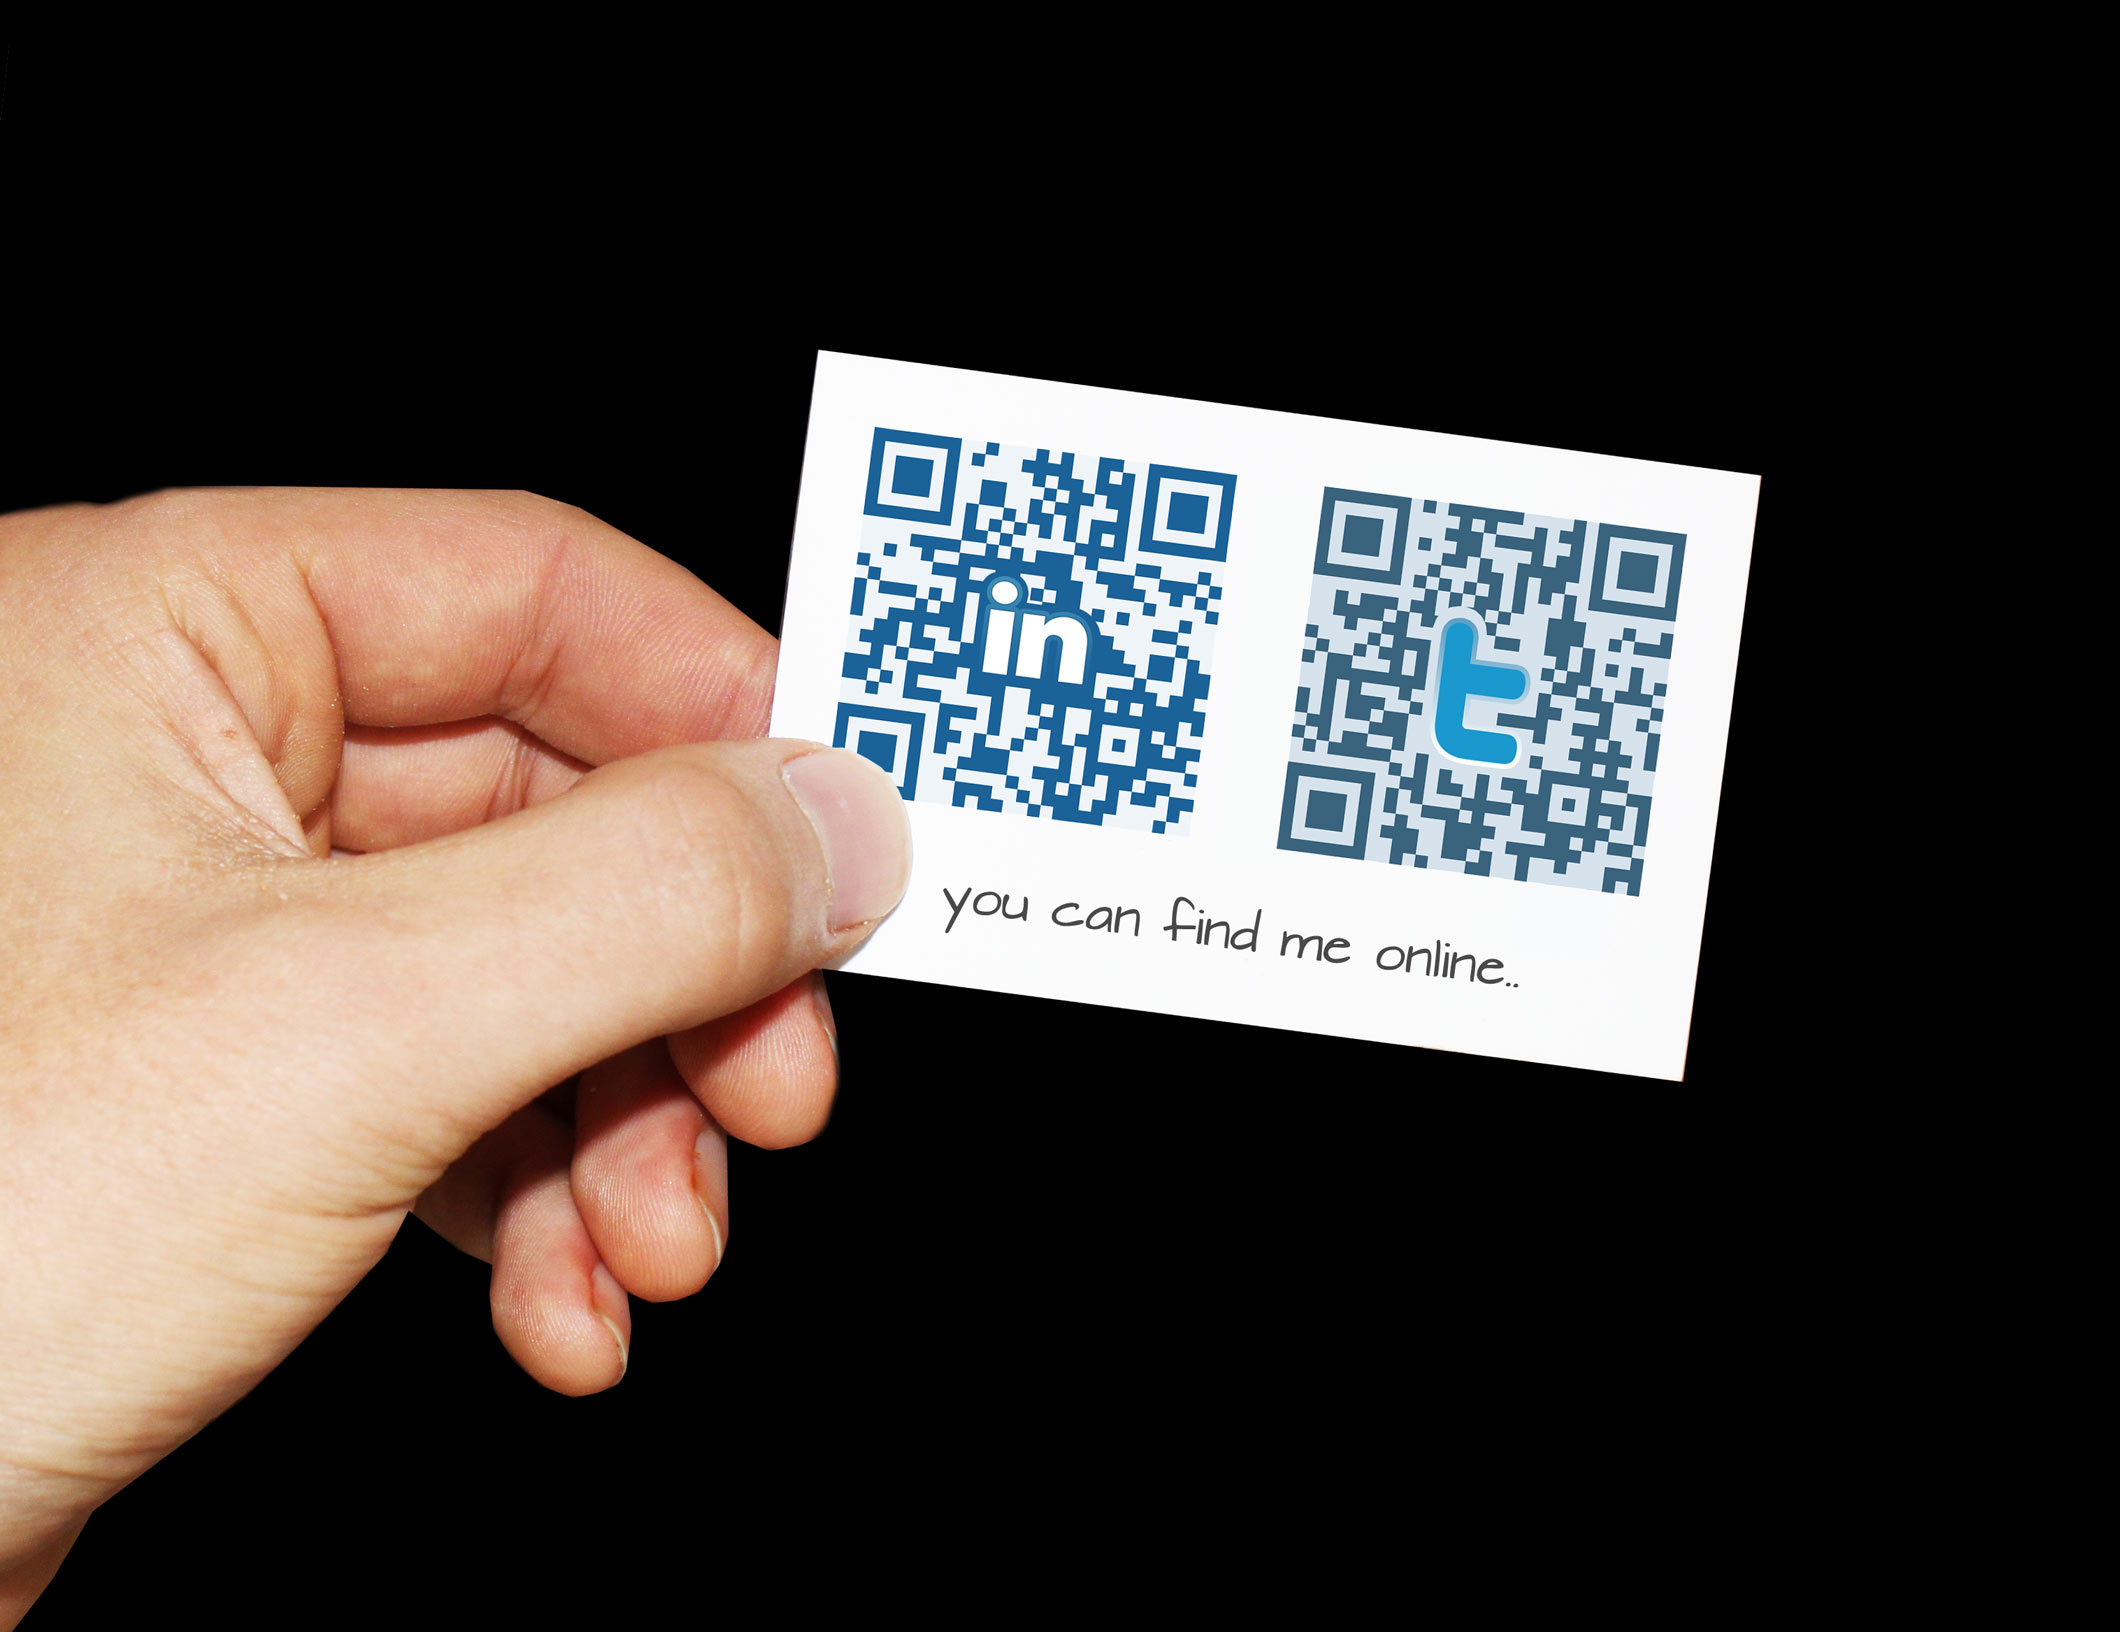 Qr код цвет. Визитка с QR кодом. QR коды на визитке. Образец визитки с QR кодом. Необычная визитка QR код.